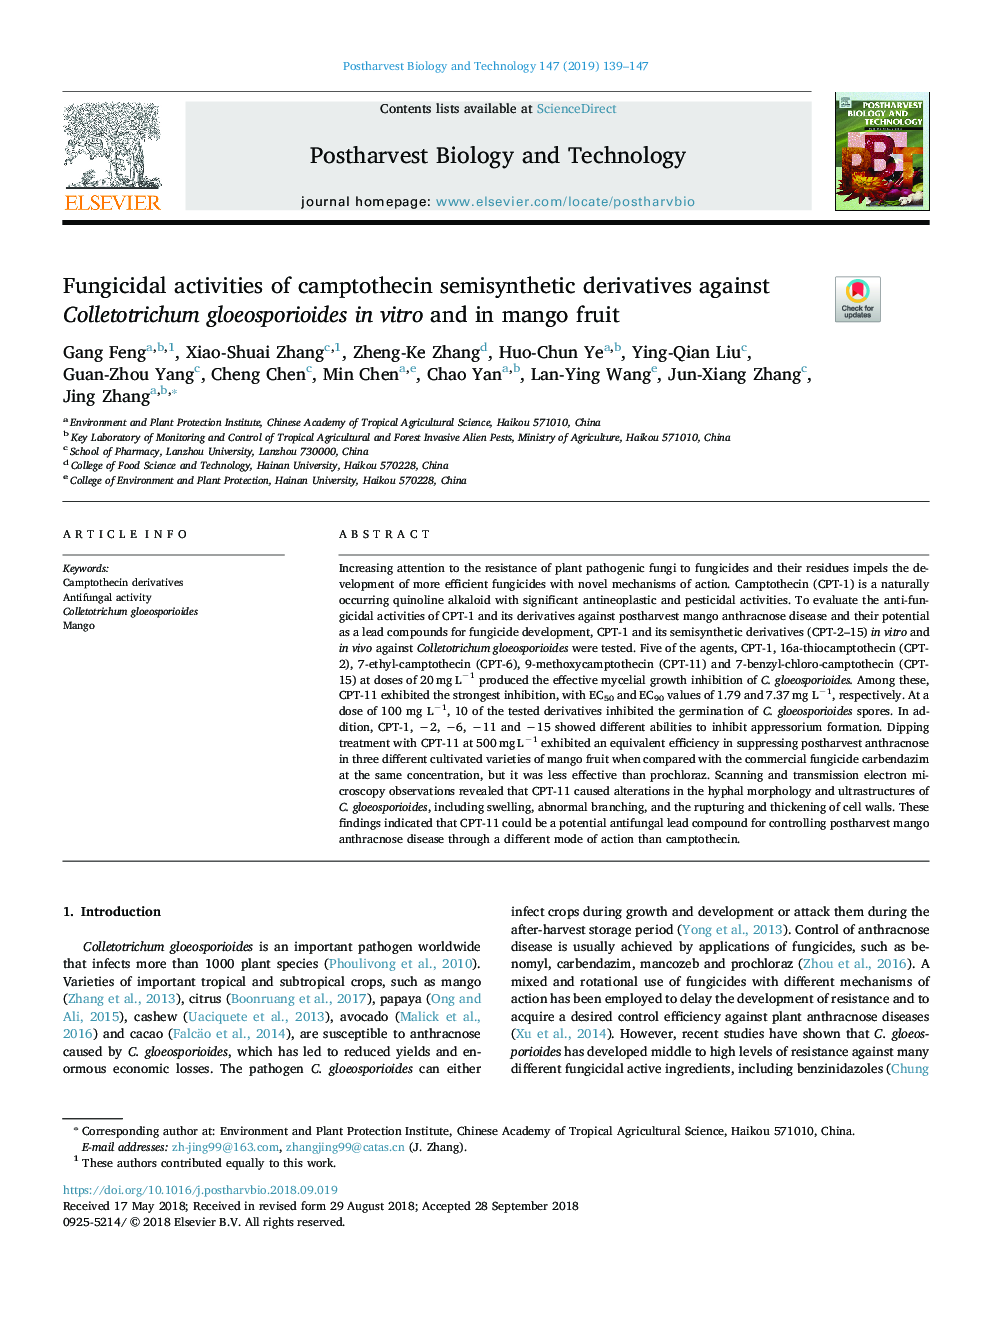 Fungicidal activities of camptothecin semisynthetic derivatives against Colletotrichum gloeosporioides in vitro and in mango fruit